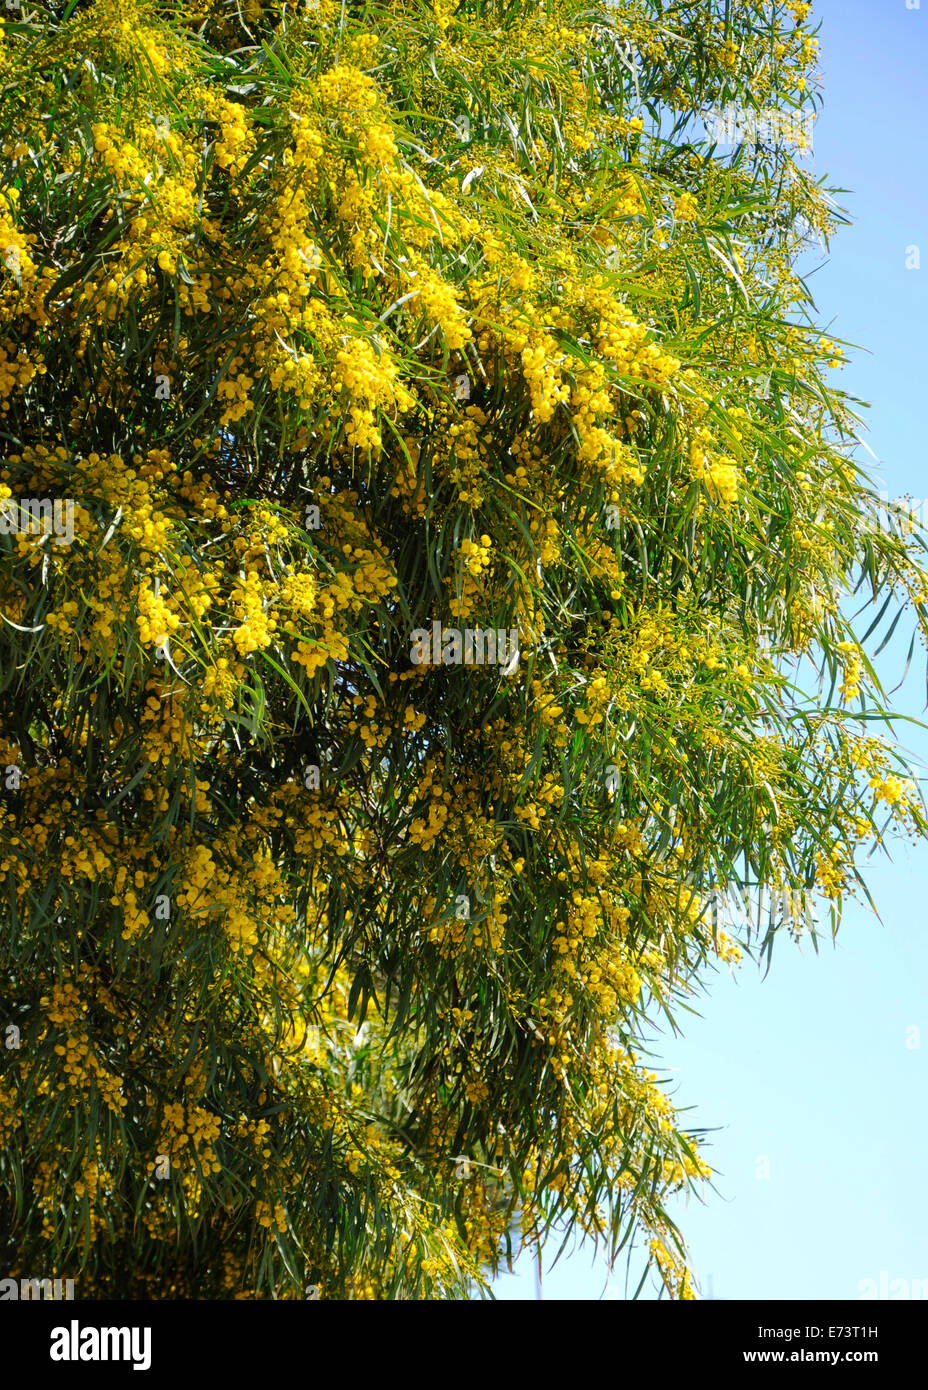 Beautiful Australian Wattle Acacia Tree in full winter bloom against a blue sky. Stock Photo